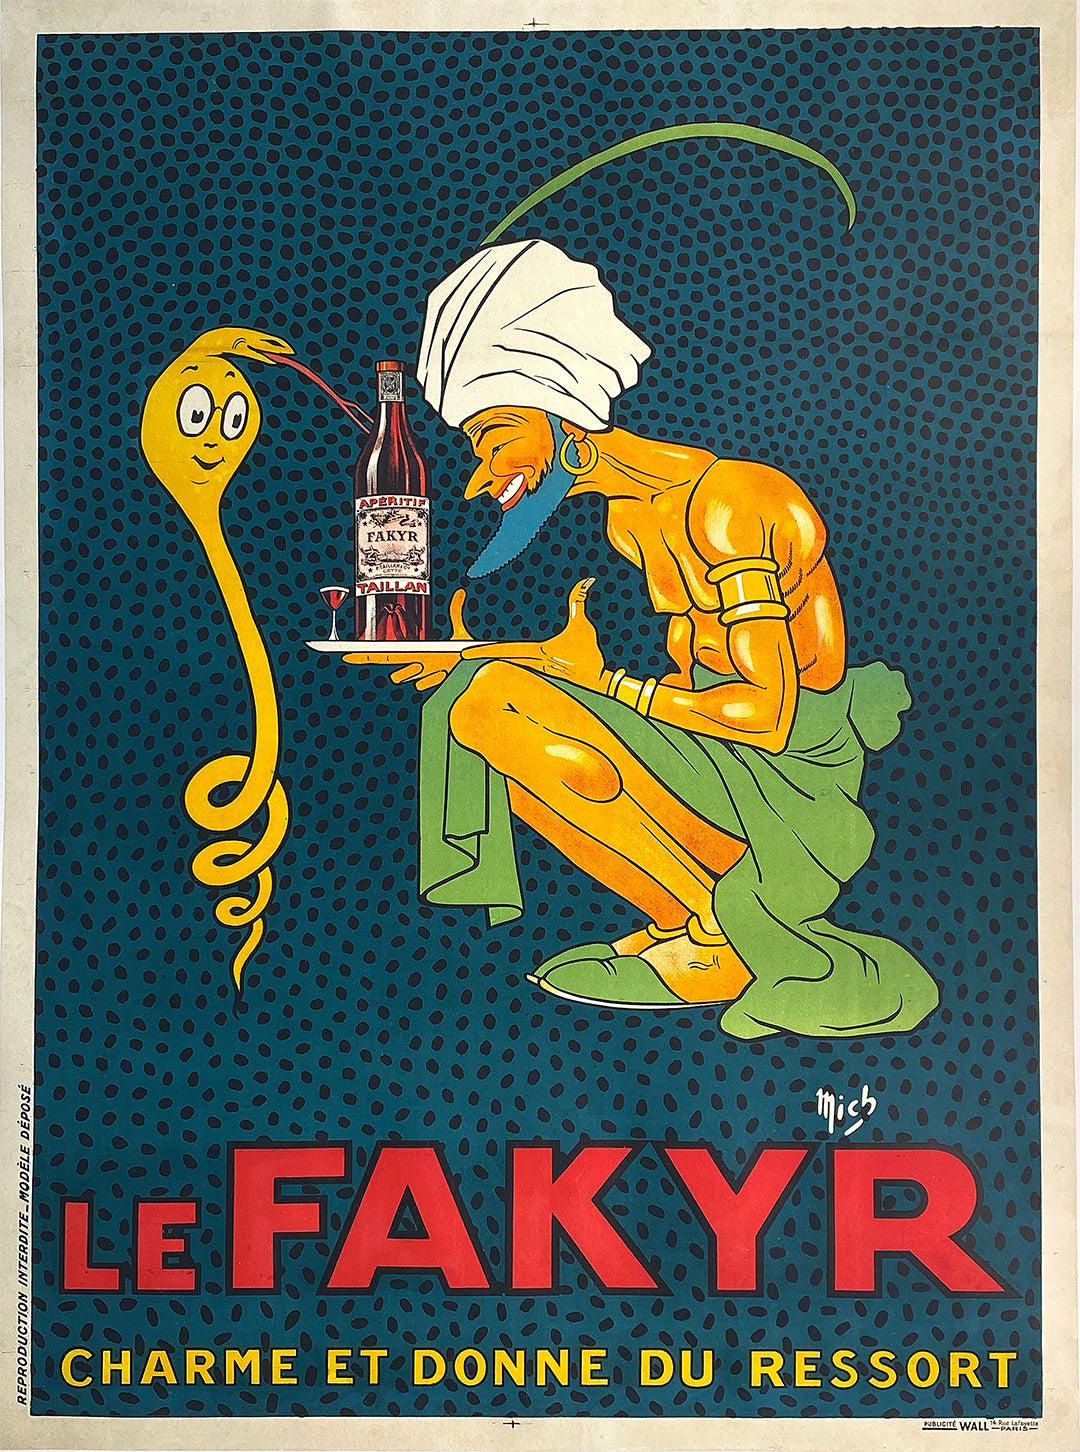 Original Vintage Le Fakyr by Mich Liquor Poster Snake Charmer